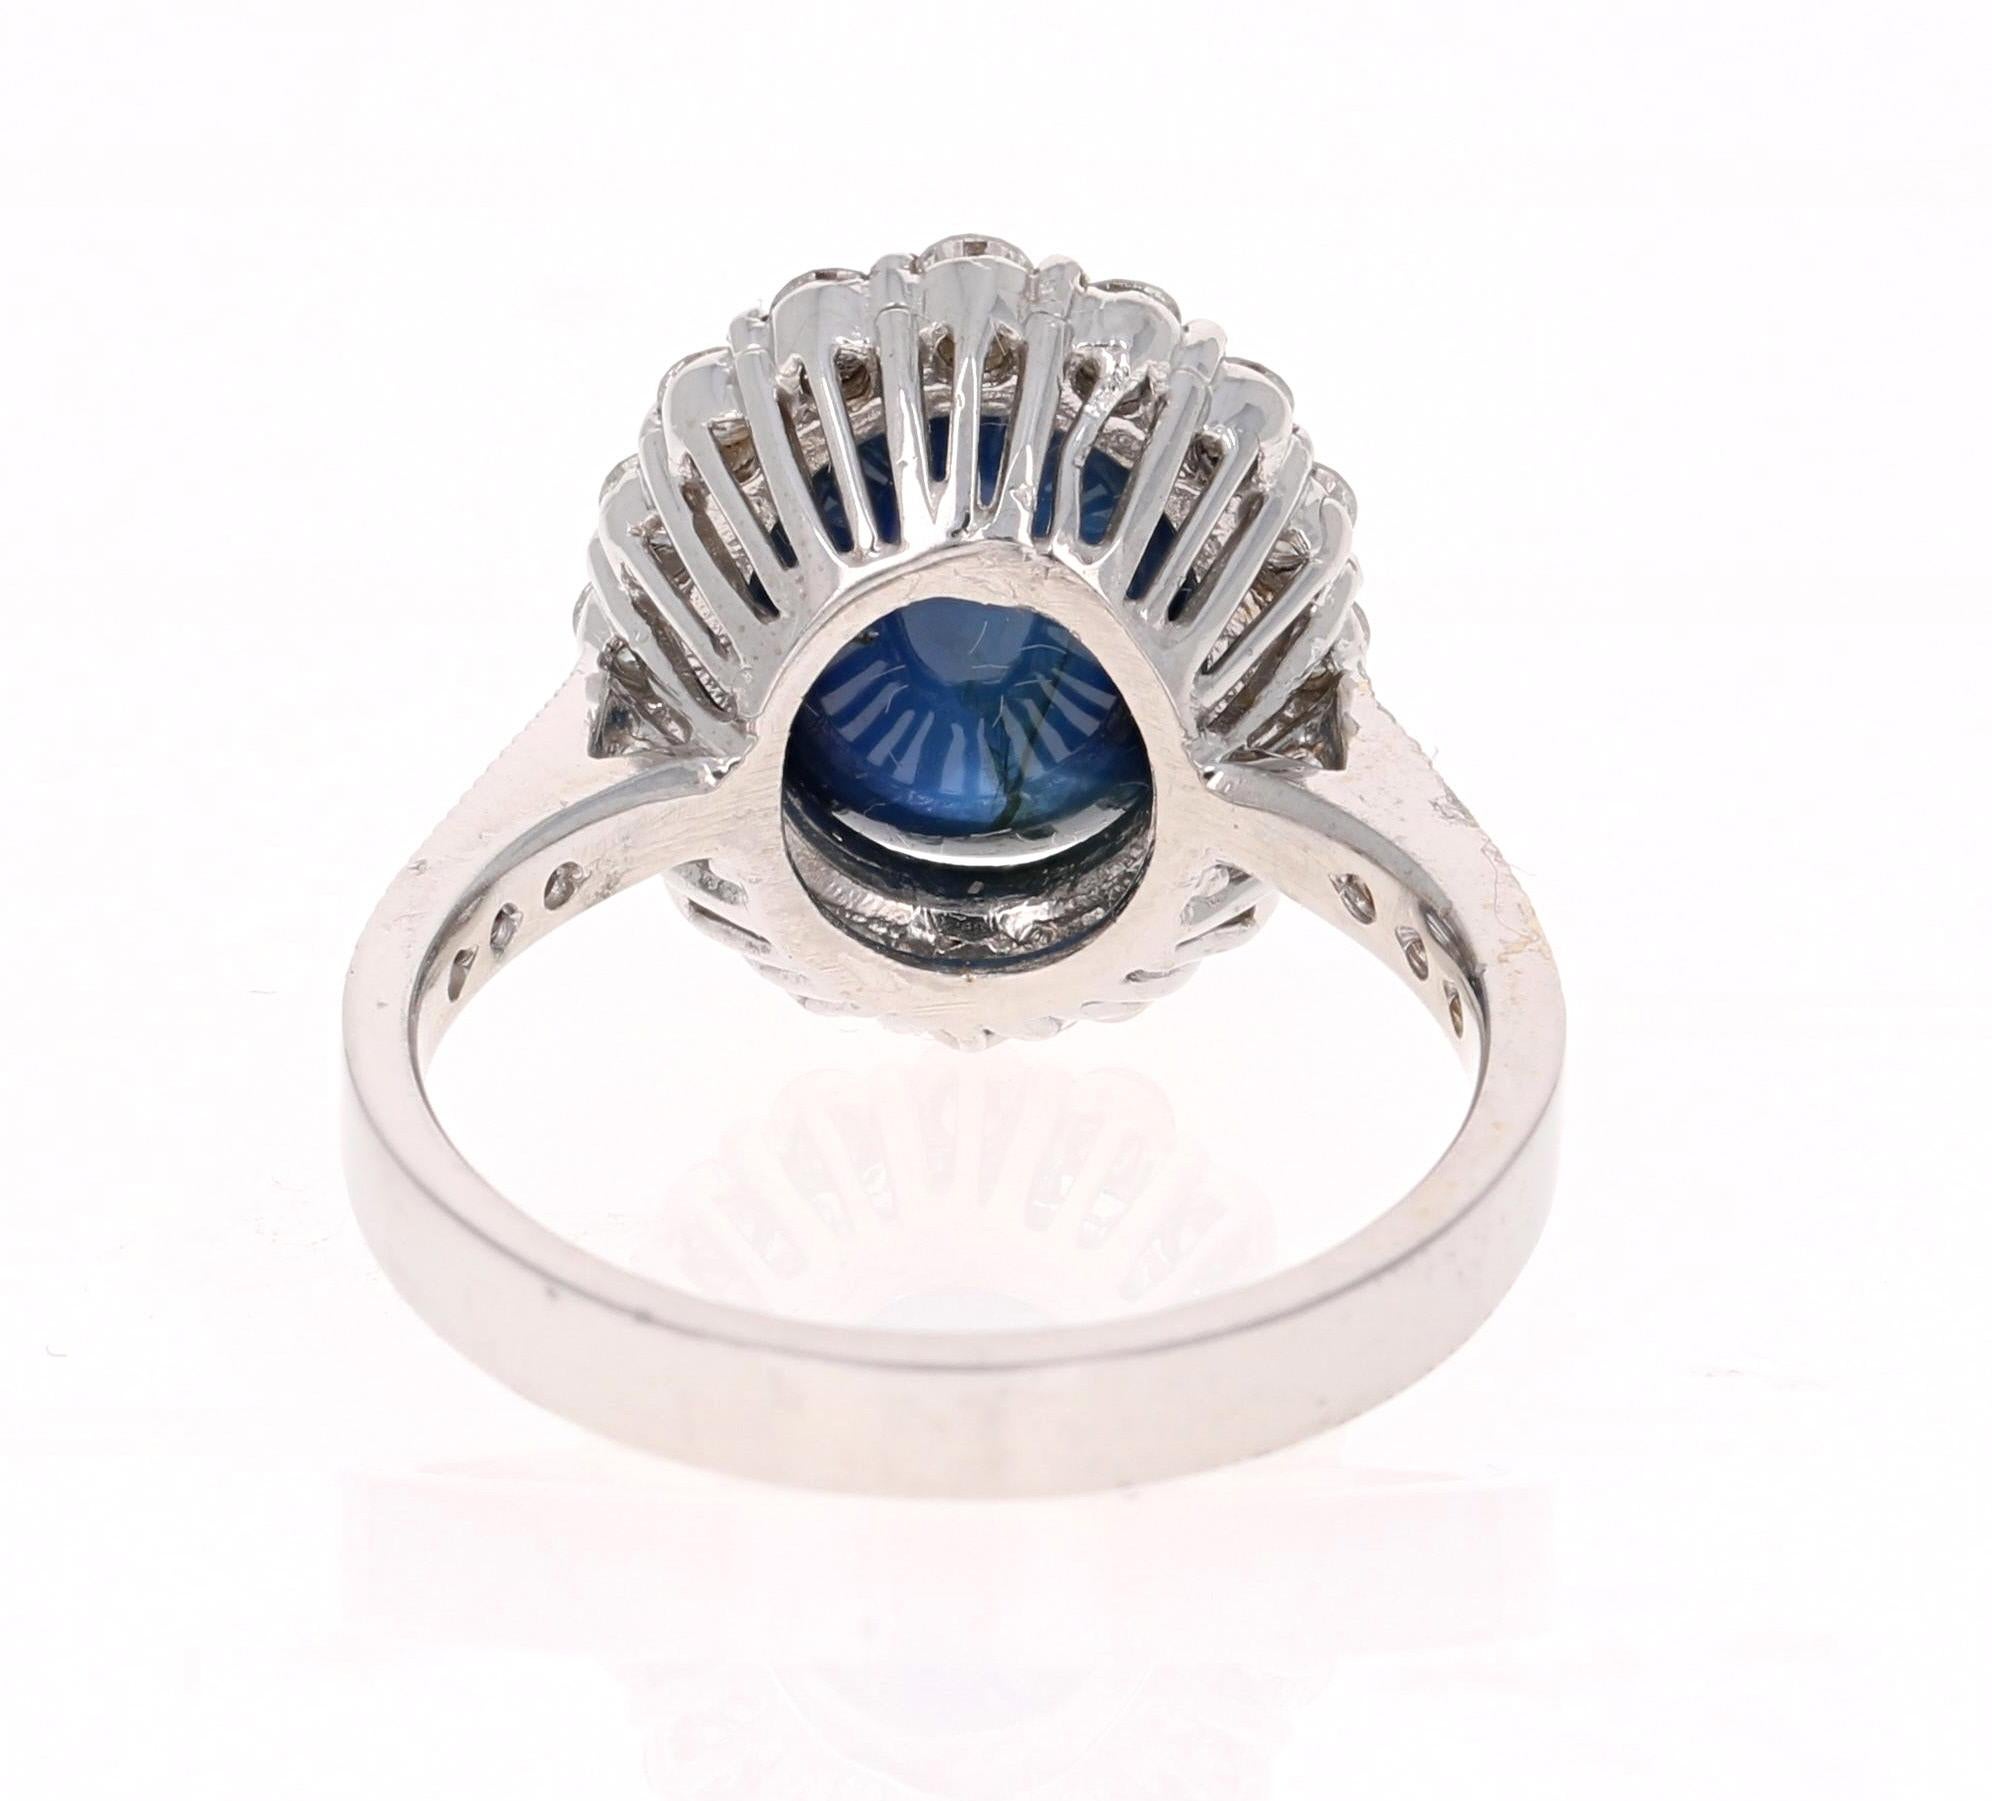 Oval Cut 6.16 Carat Sapphire Diamond 18 Karat White Gold Bridal Ring For Sale